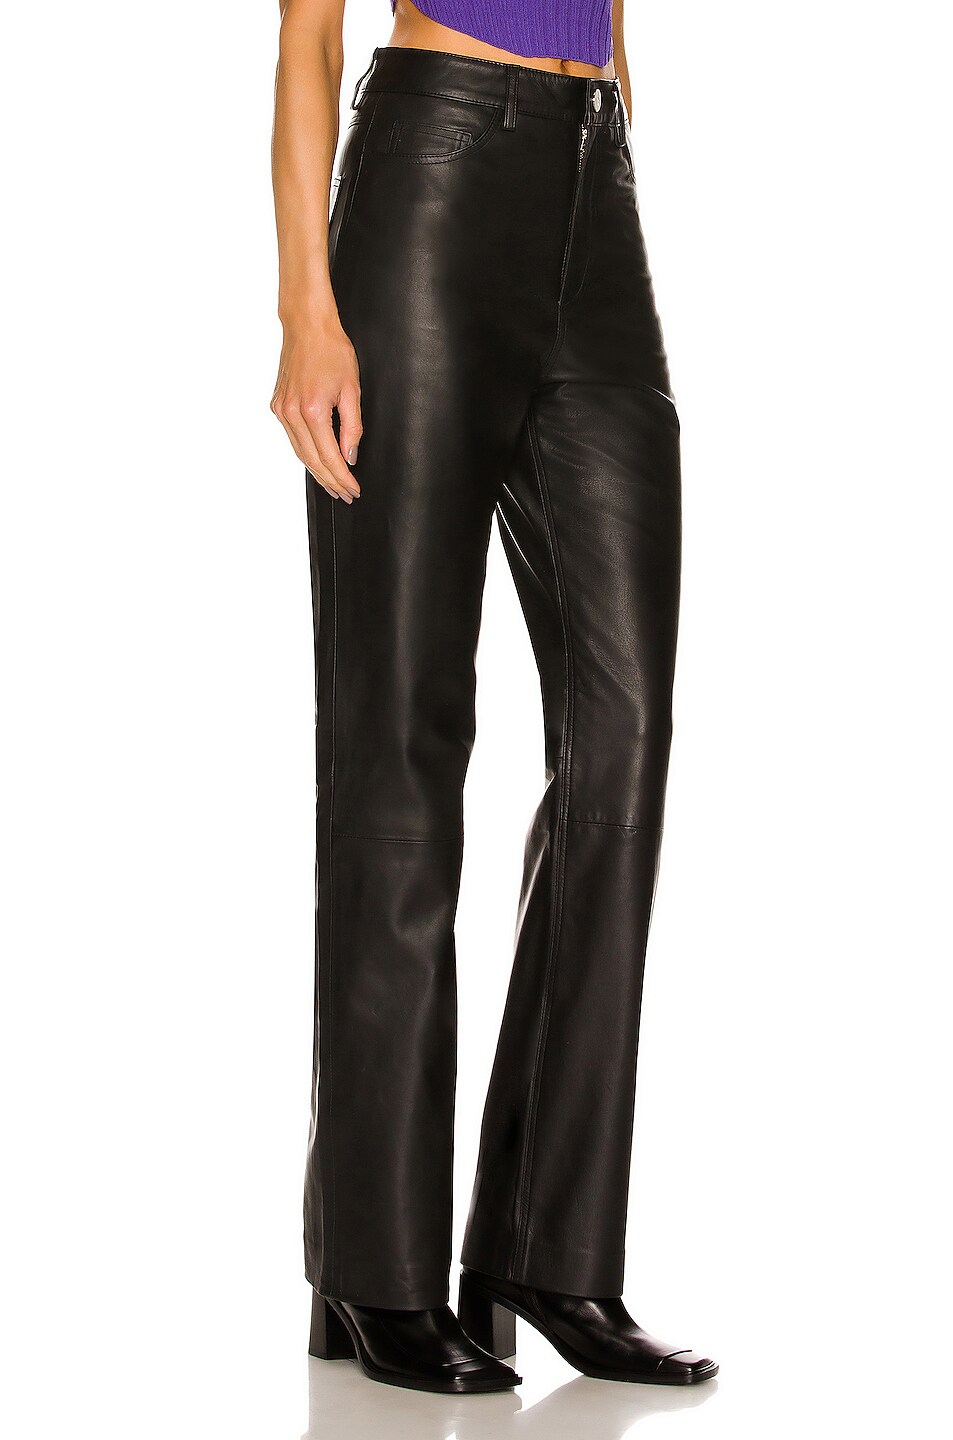 REMAIN Lynn Leather Pant in Black | FWRD